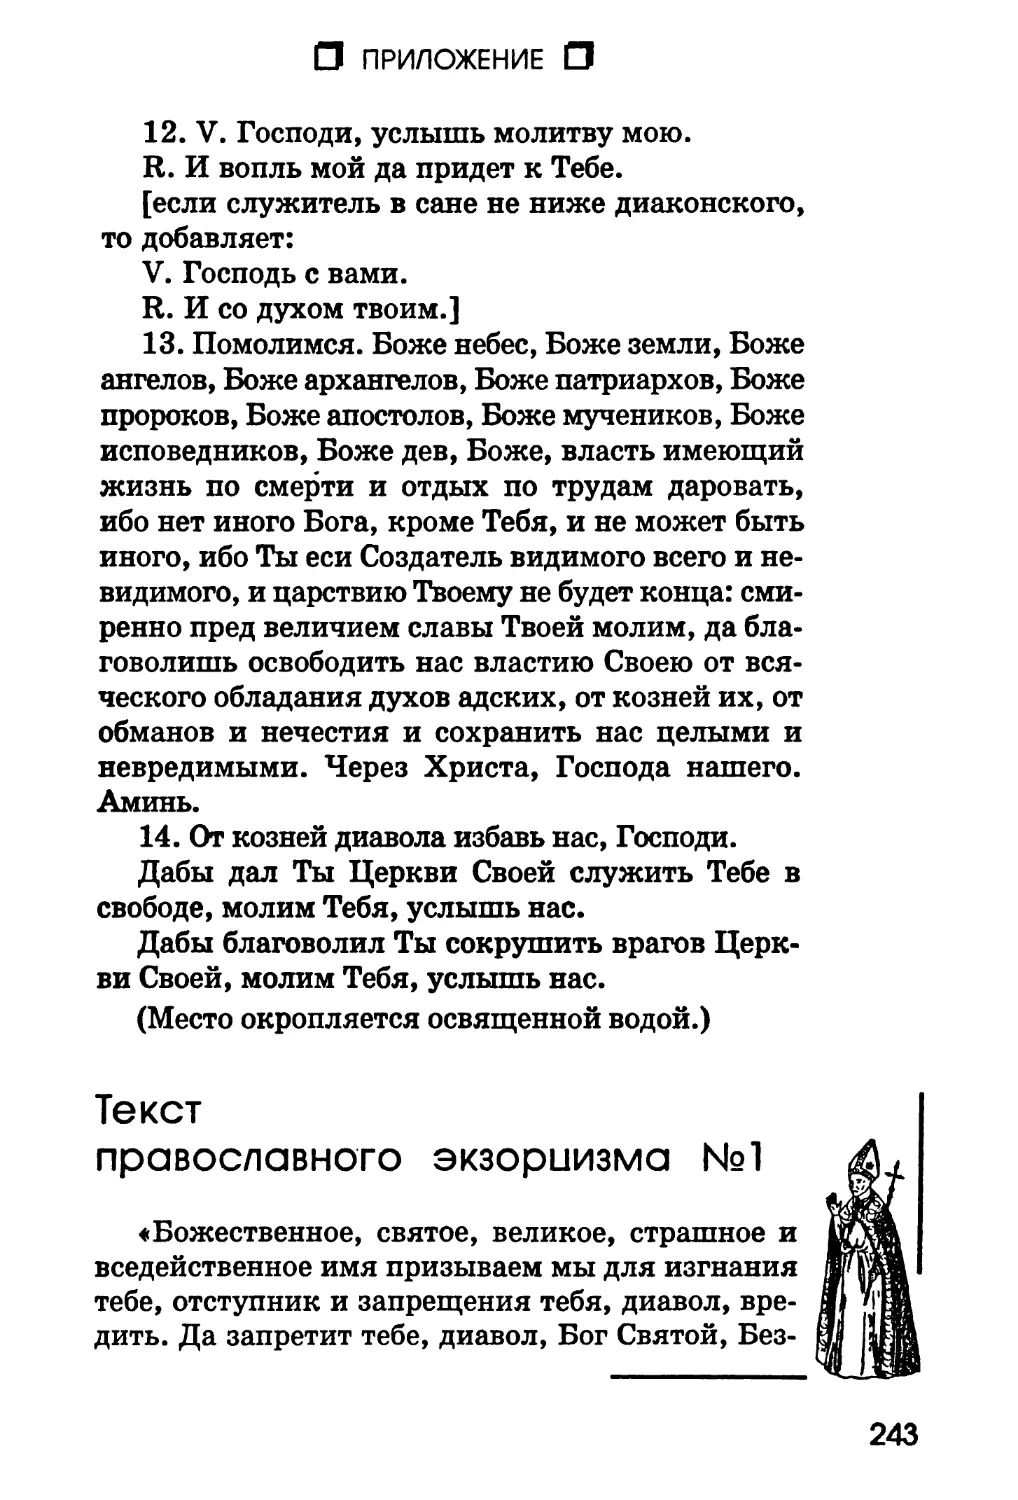 Текст православного экзорцизма №1